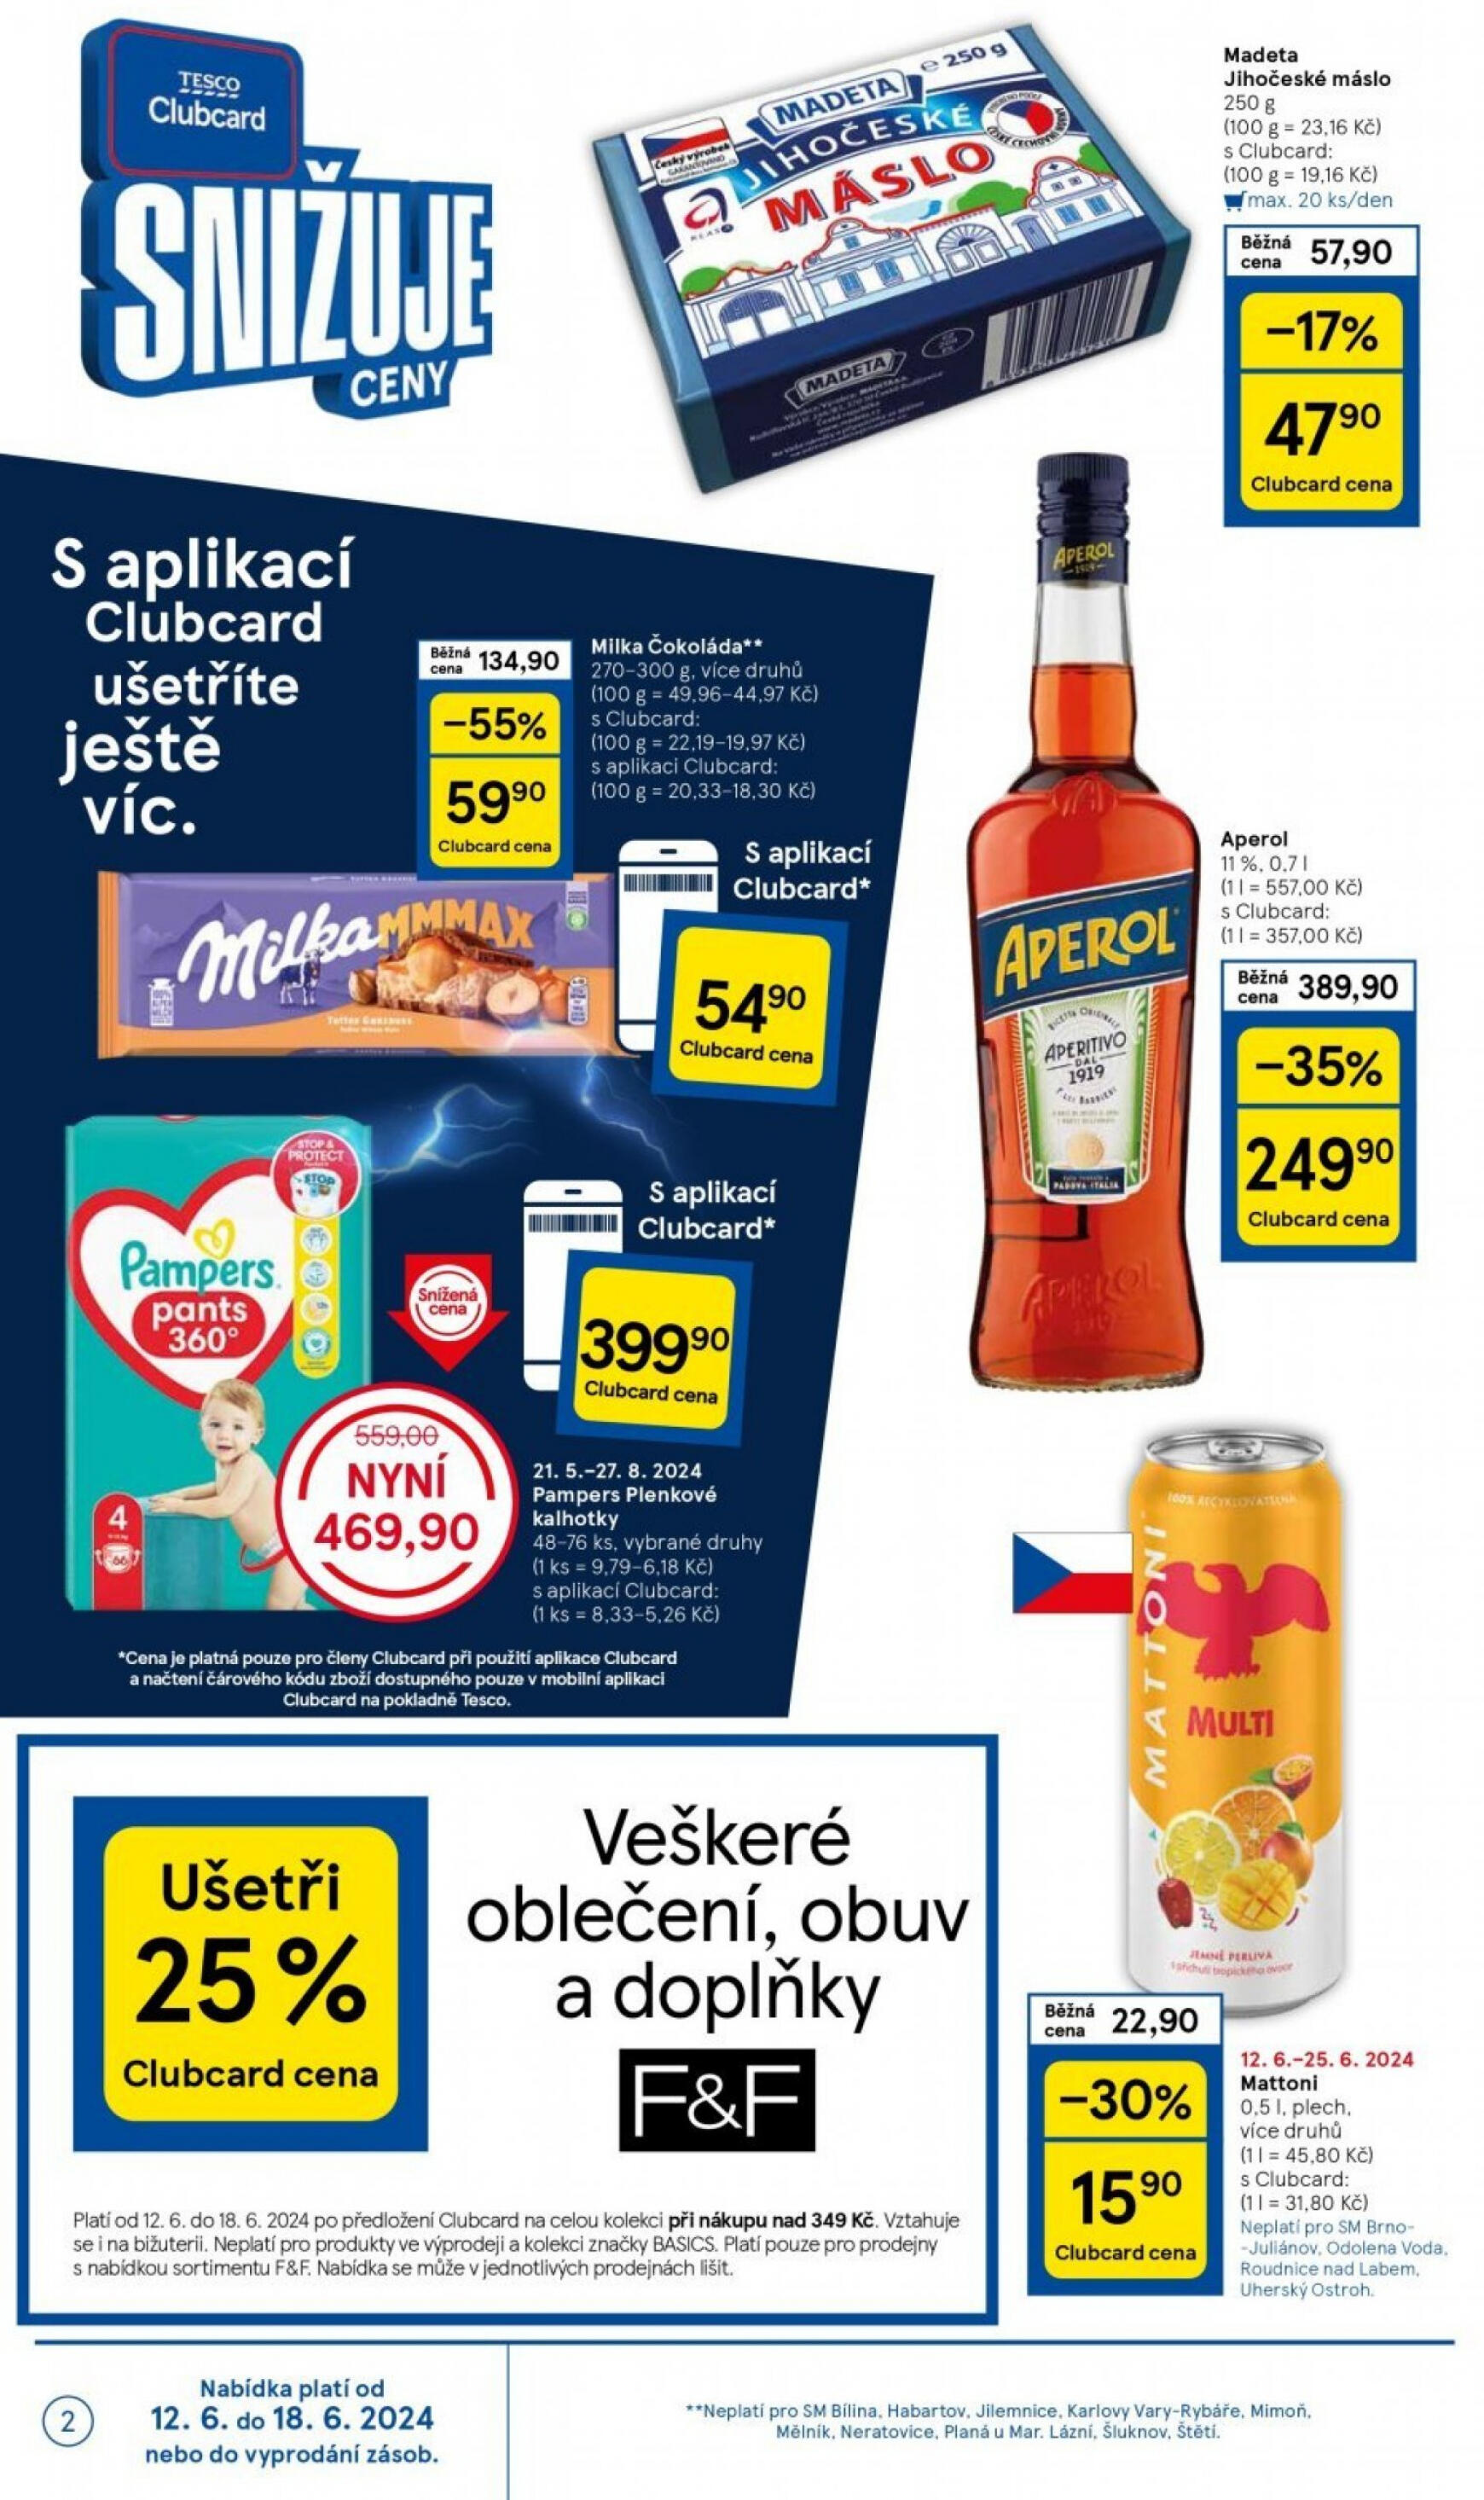 tesco - Leták Tesco supermarket aktuální 12.06. - 18.06. - page: 2